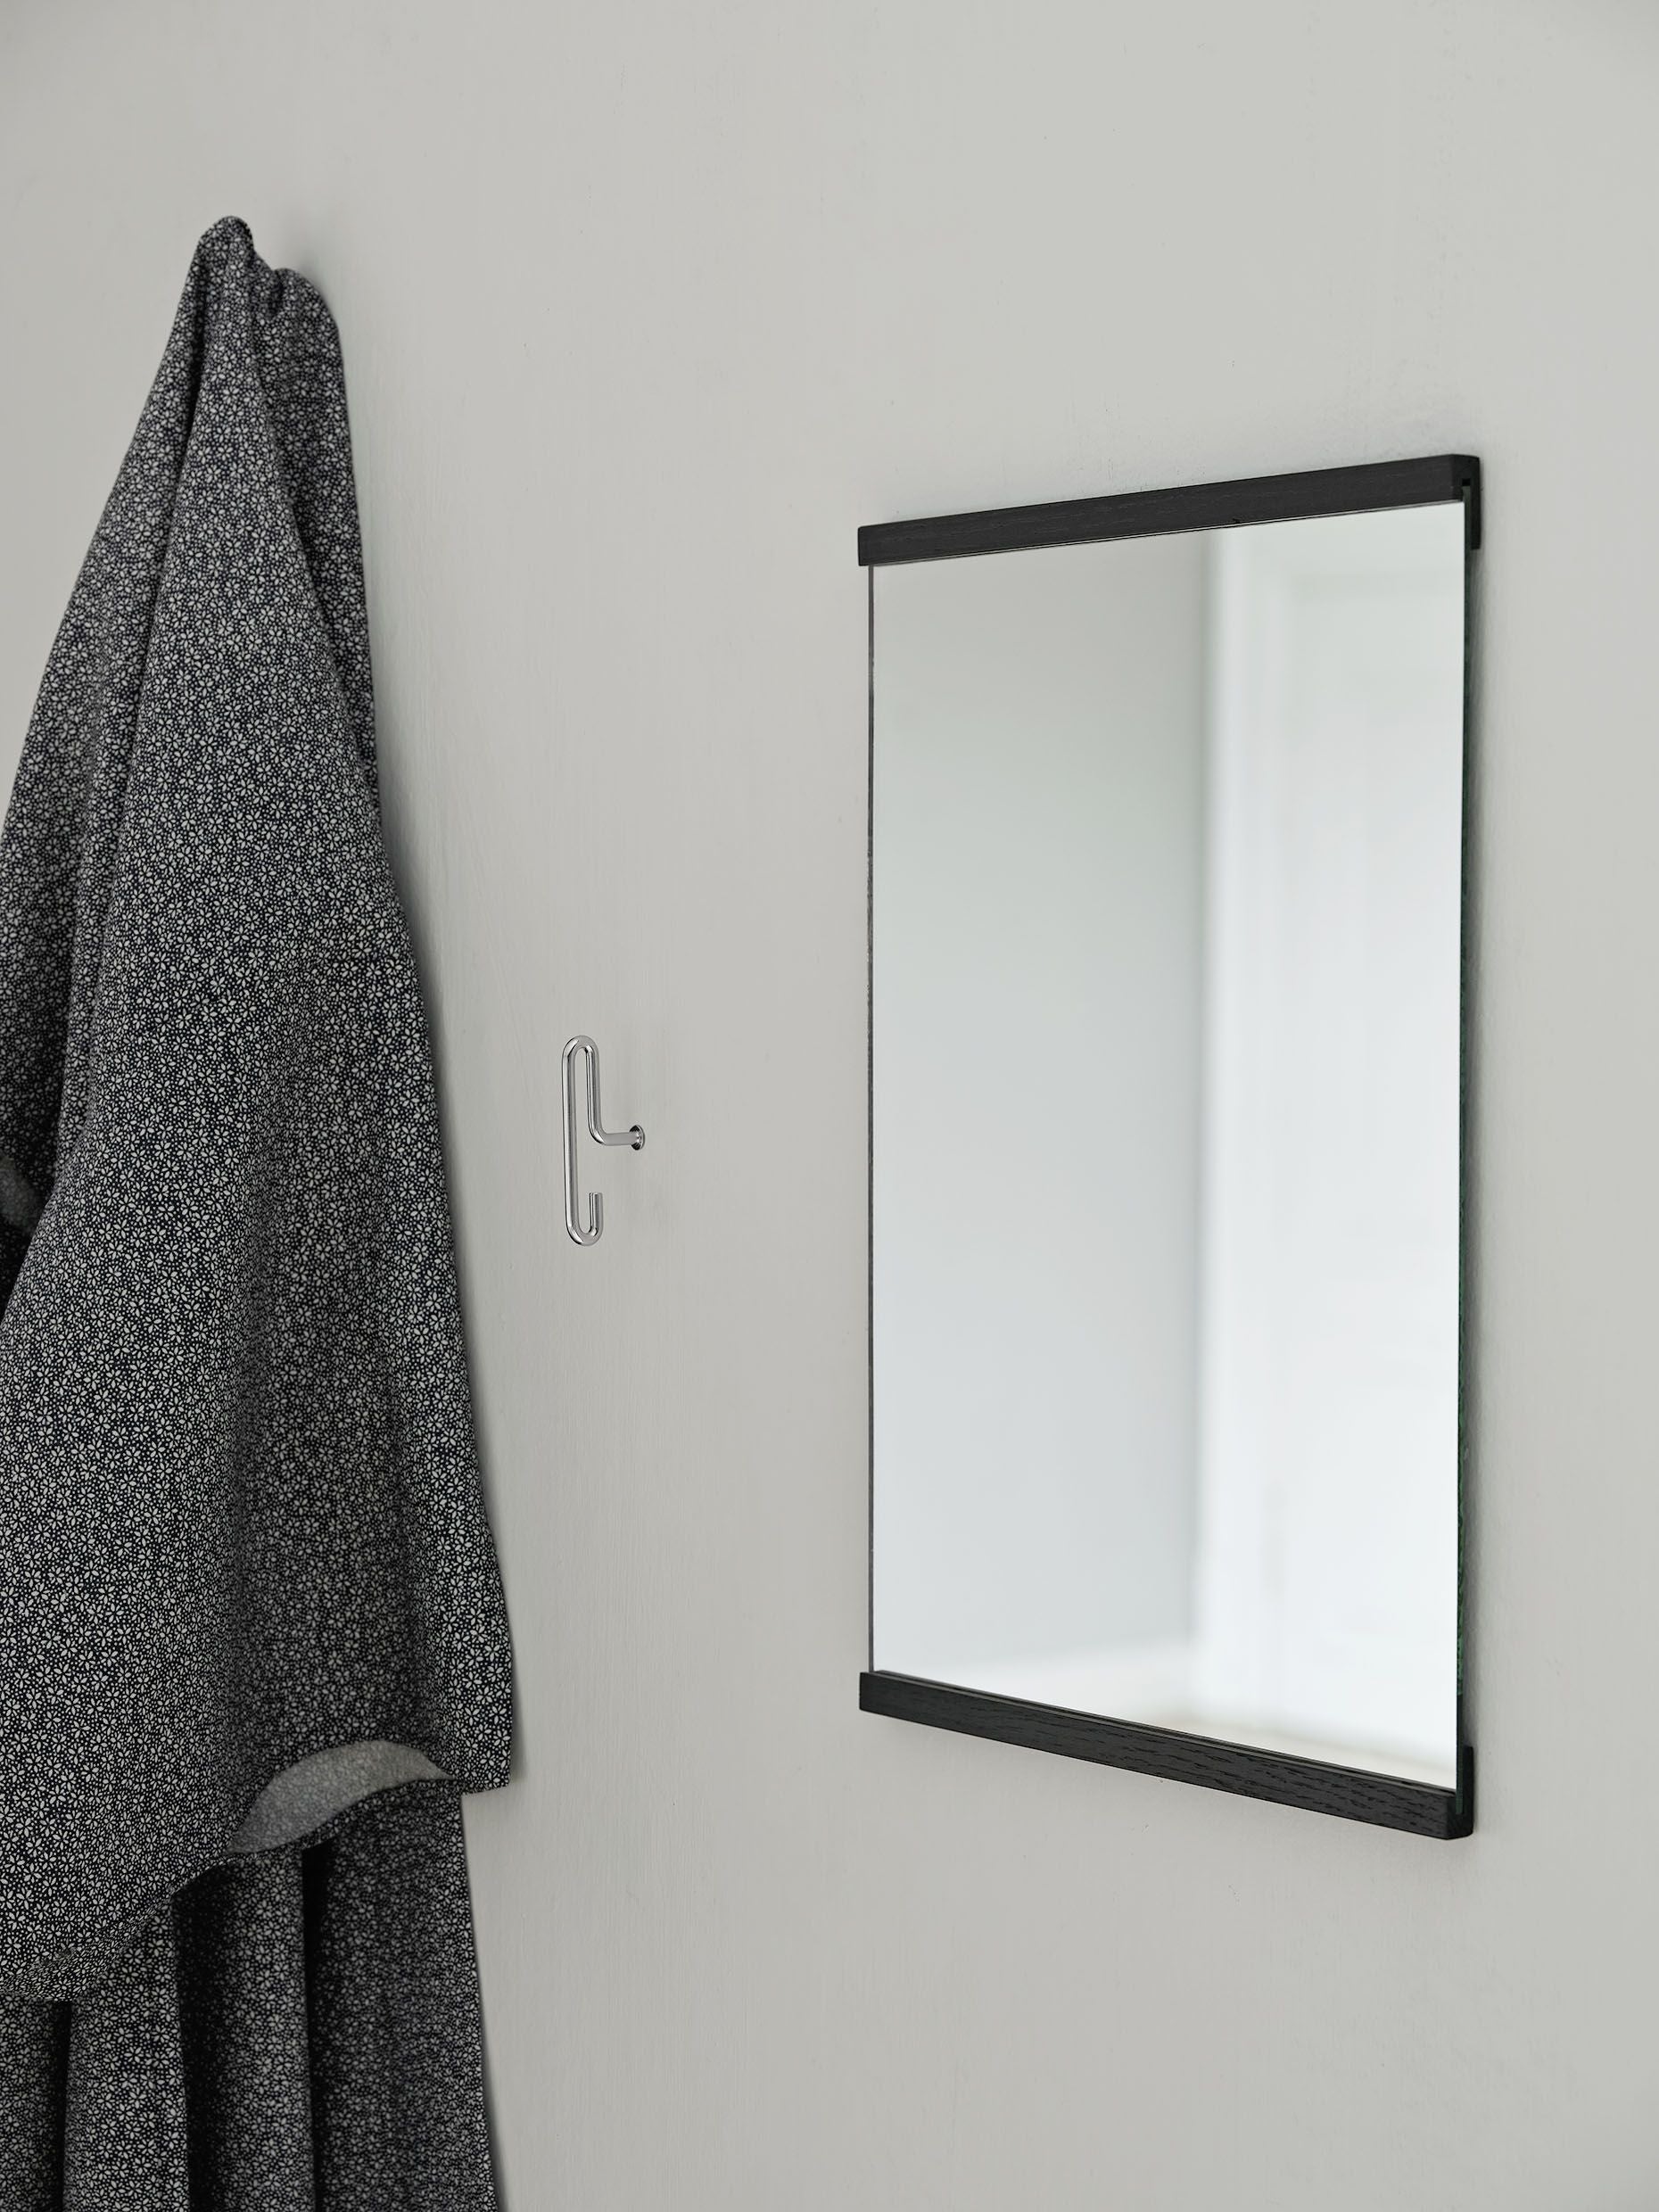 Moebe Rektangulær væg spejl 101,8x70 cm, sort